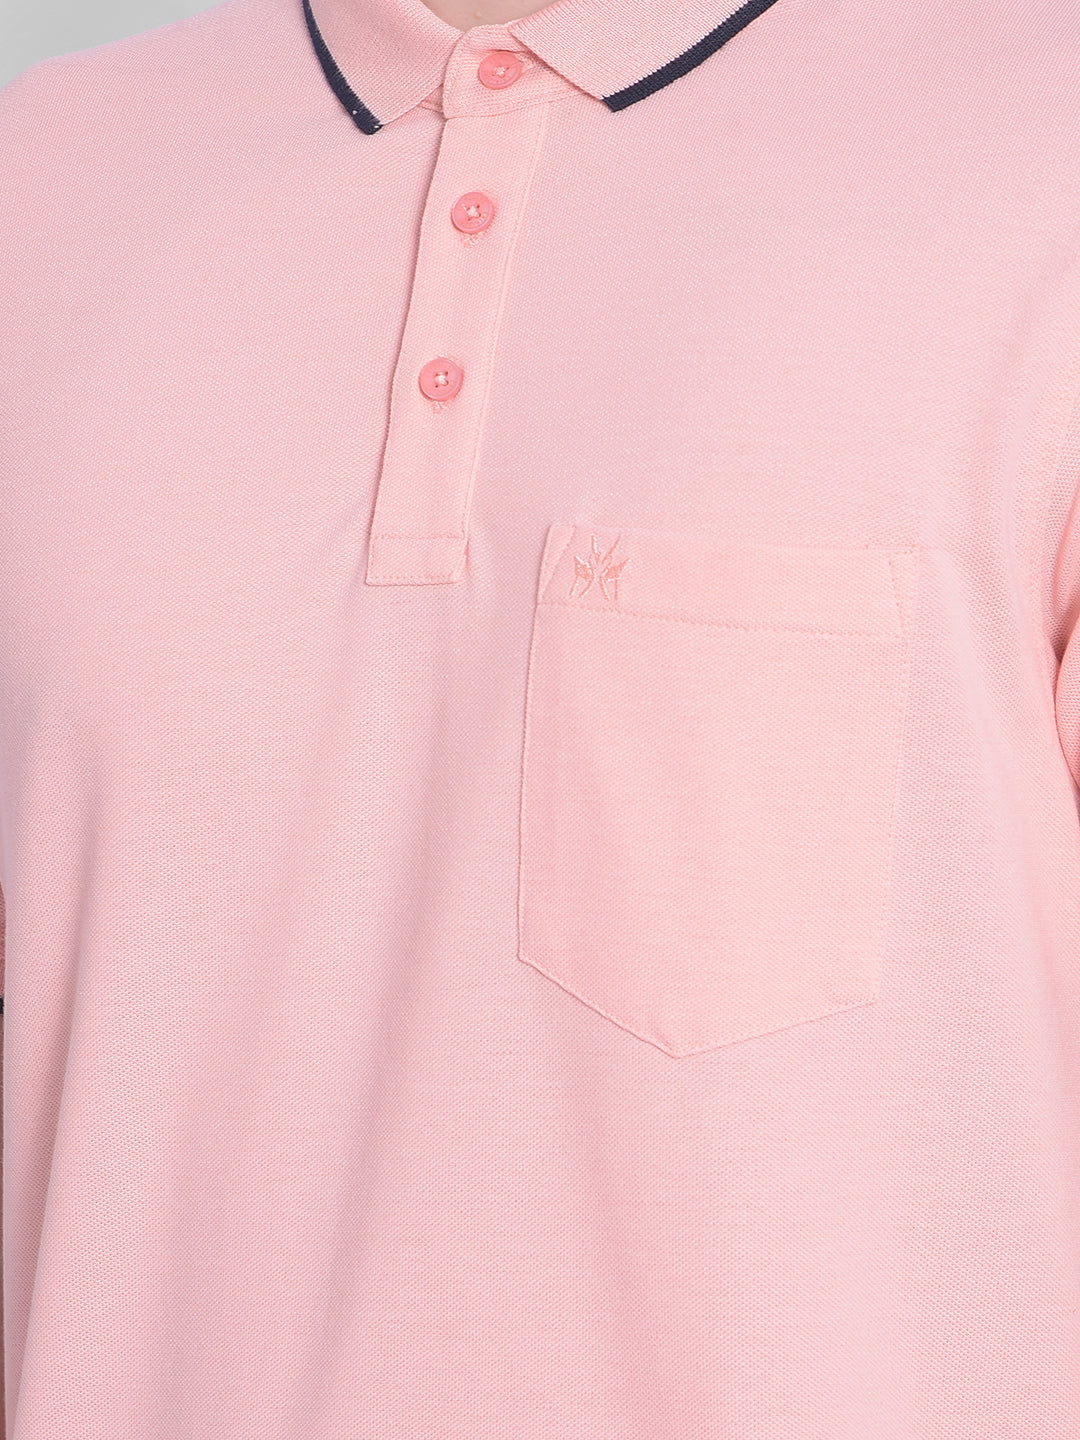 Pink T-Shirt-Men T-Shirts-Crimsoune Club